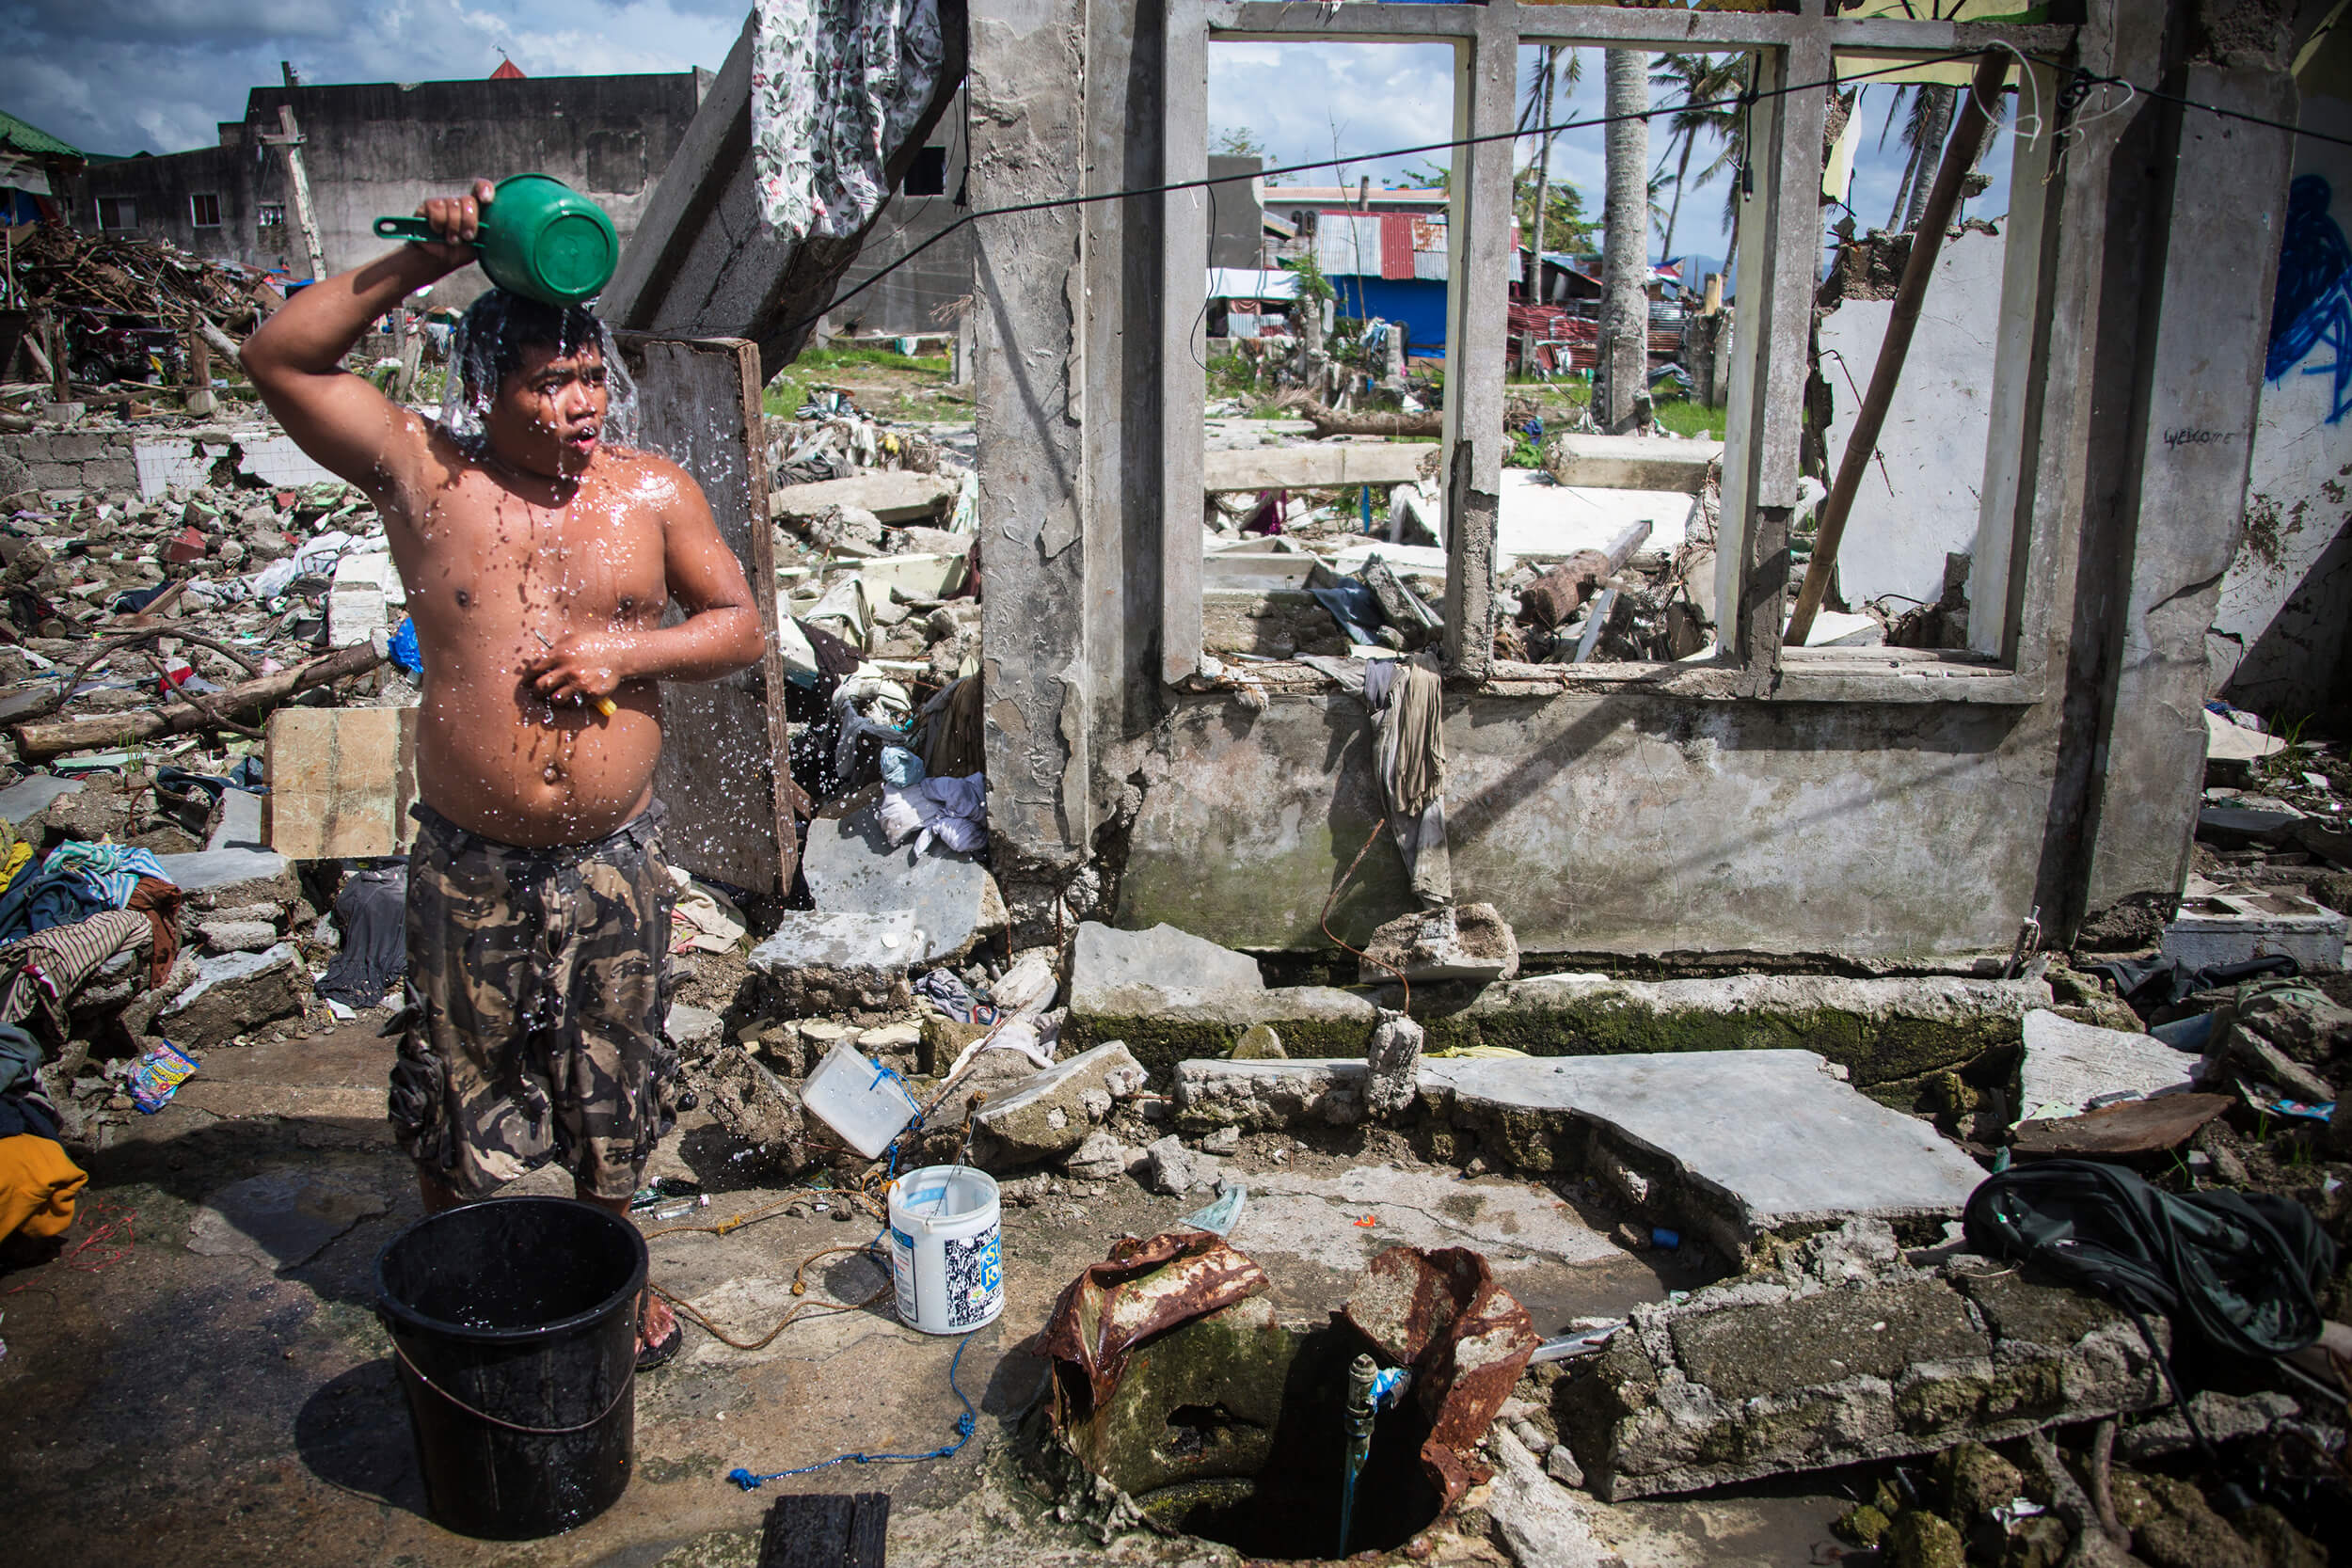  The village of Basey on the island of Samar after Typhoon Haiyan November 2013. 